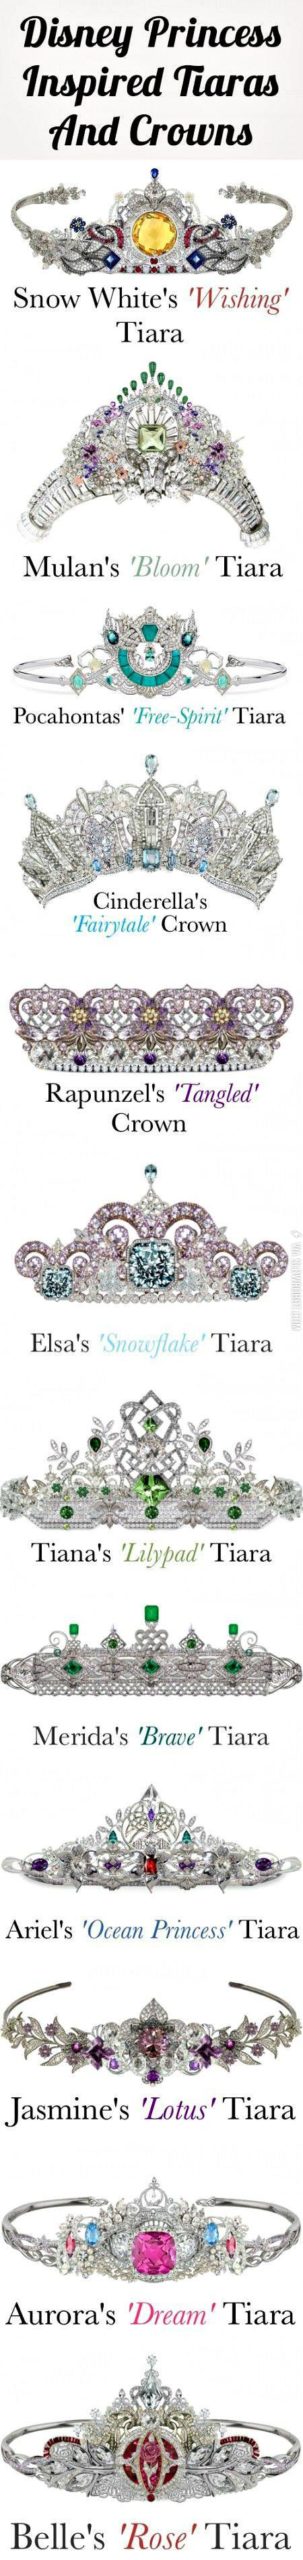 Disney+princess+inspired+tiaras+and+crowns.